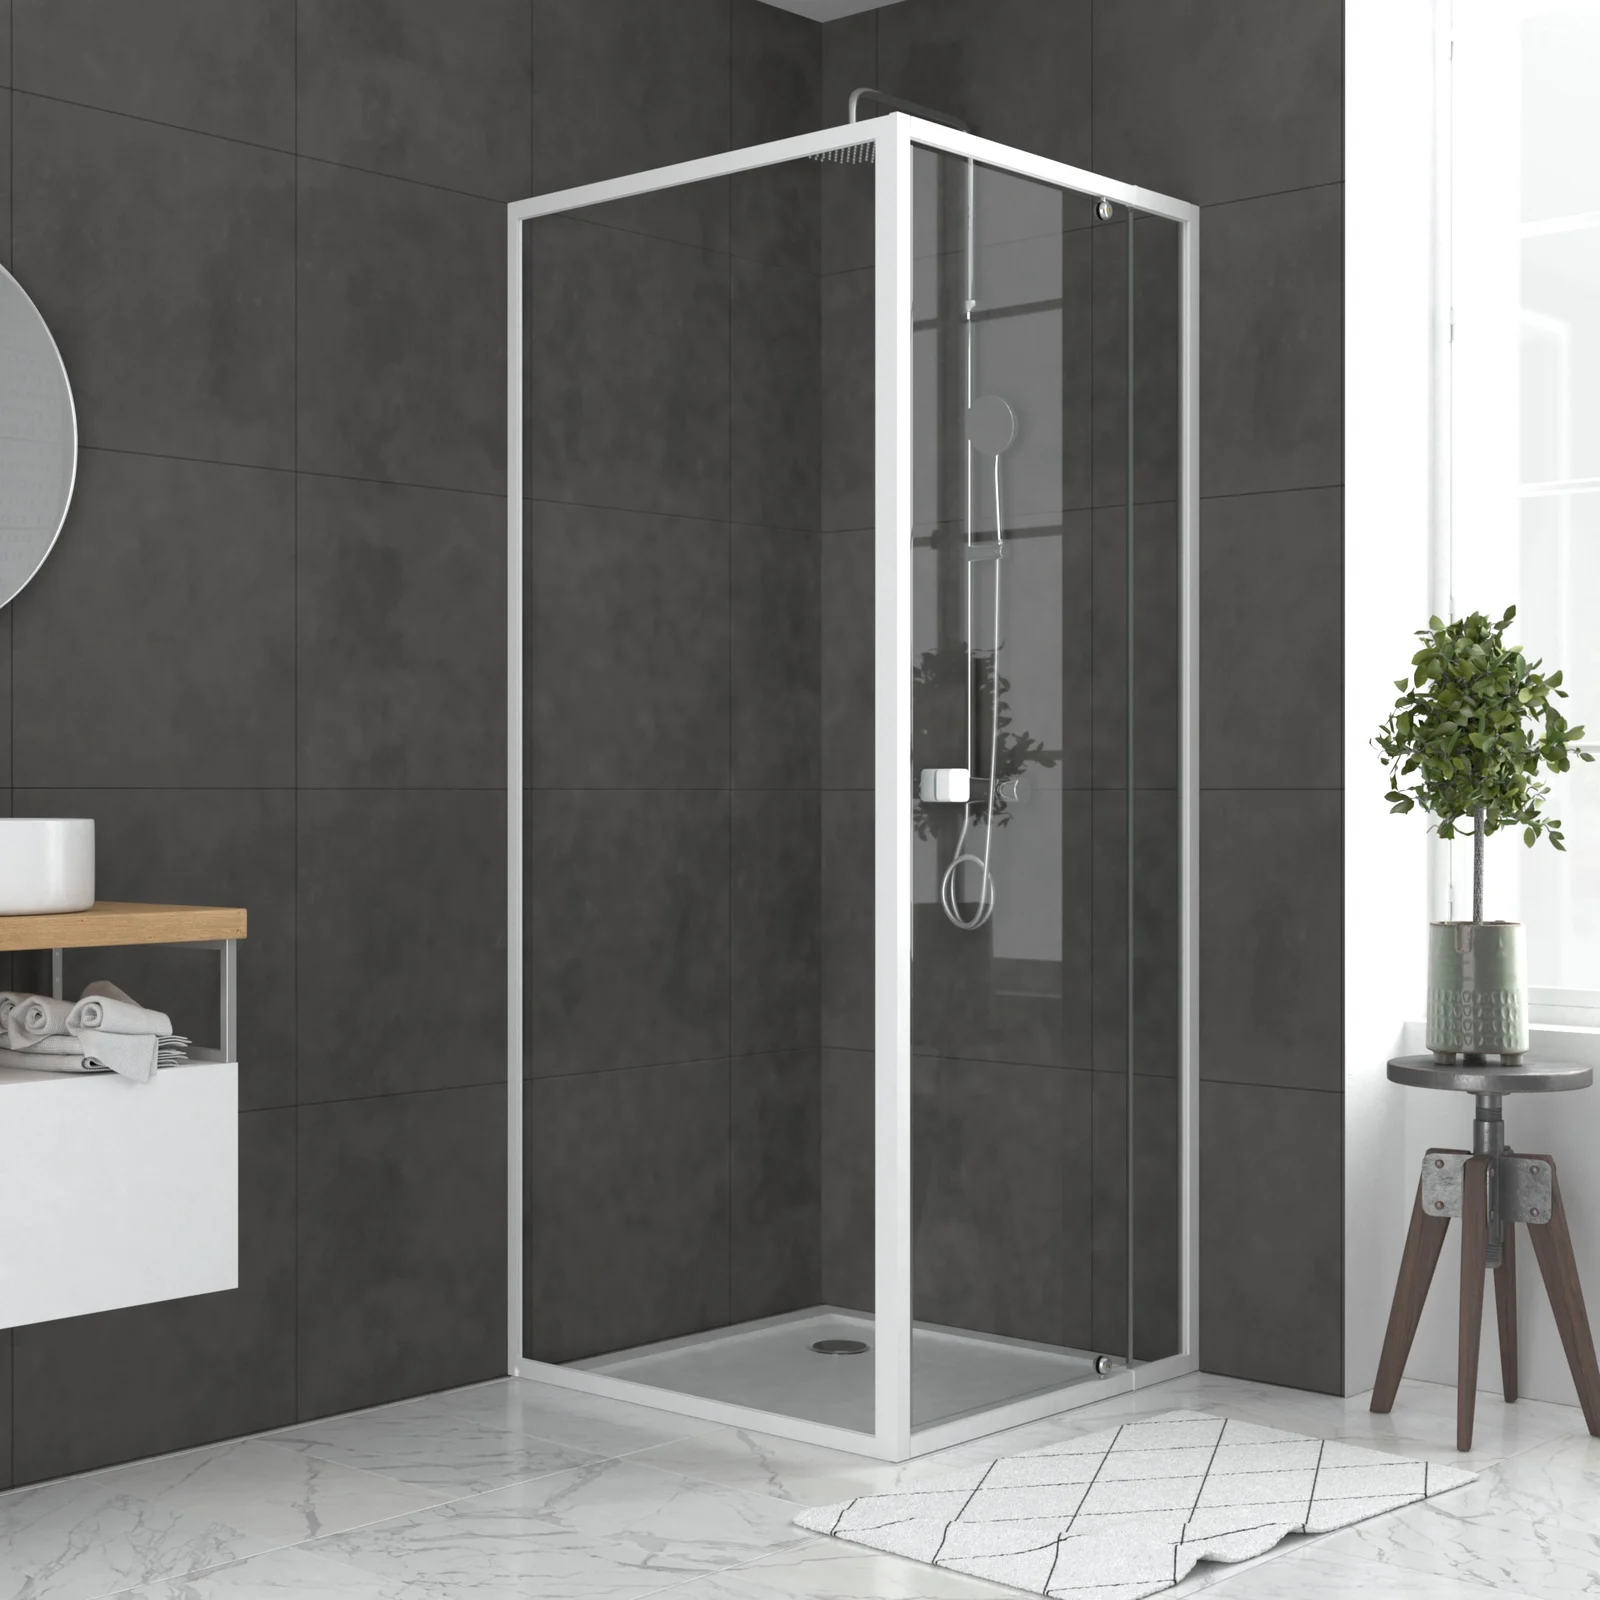 Ponsi Porte de douche pivotante de 80 cm - Banio salle de bain